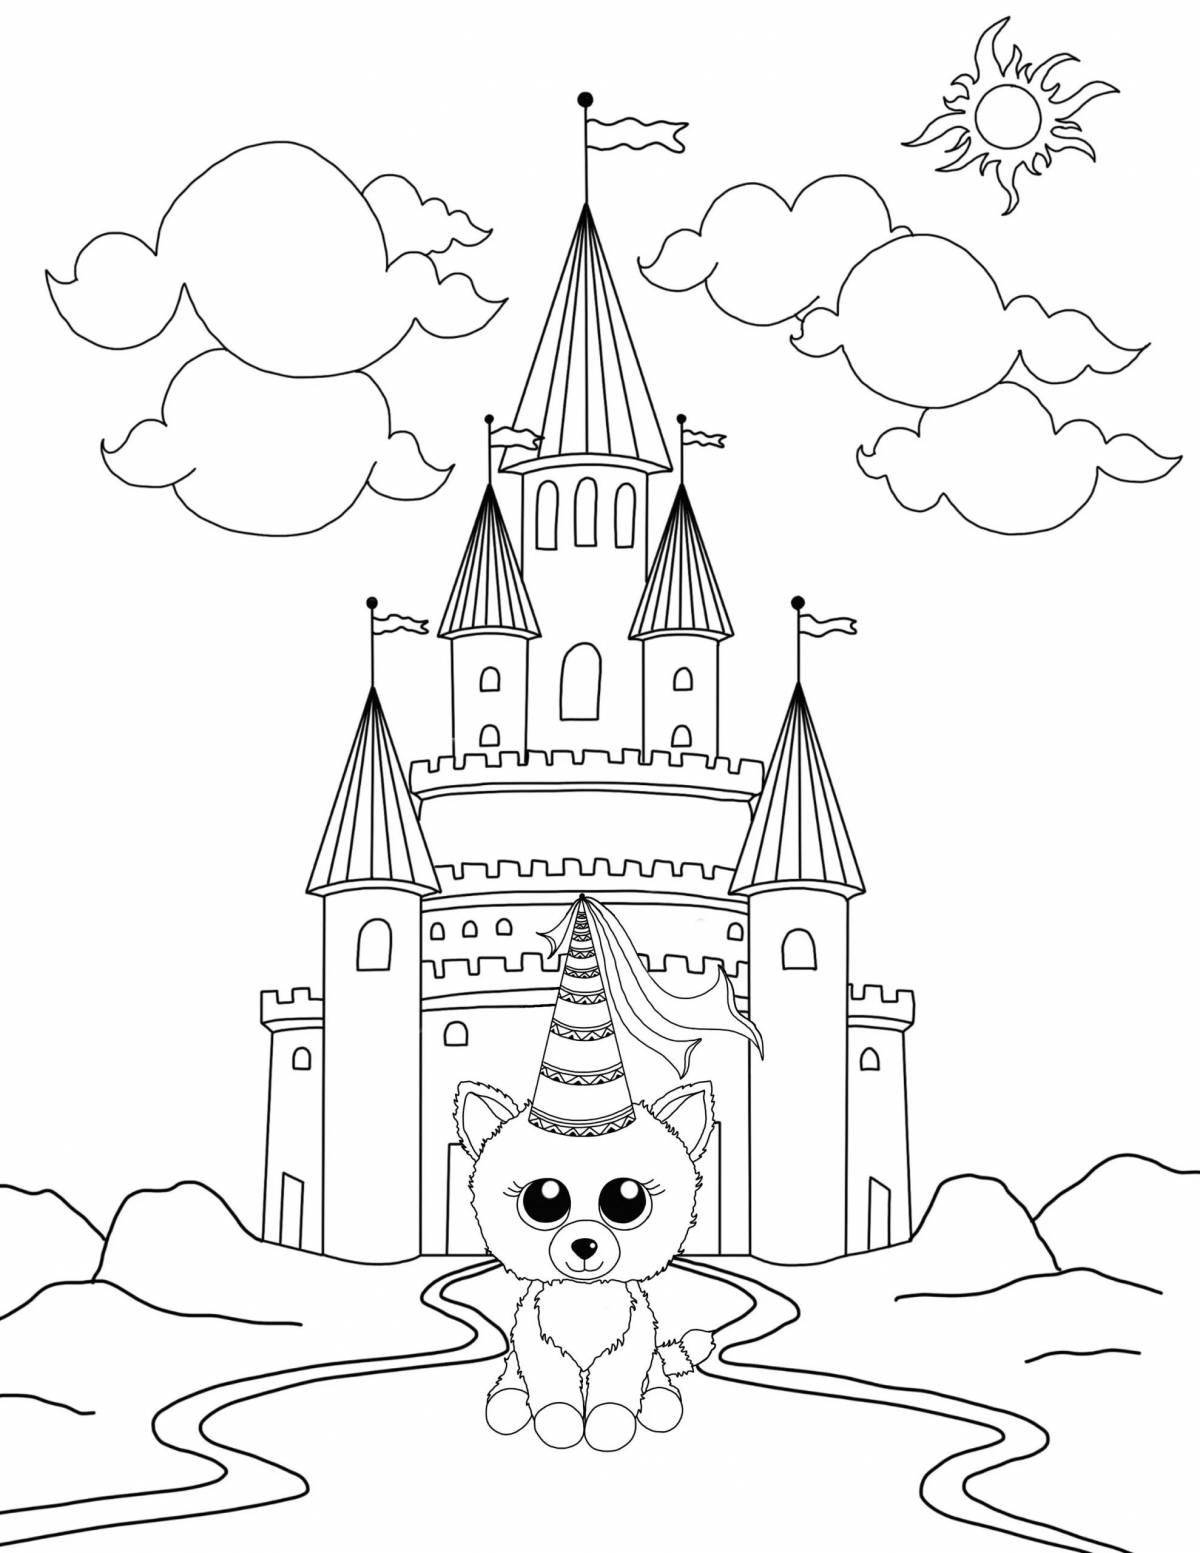 Coloring page dazzling magic castle